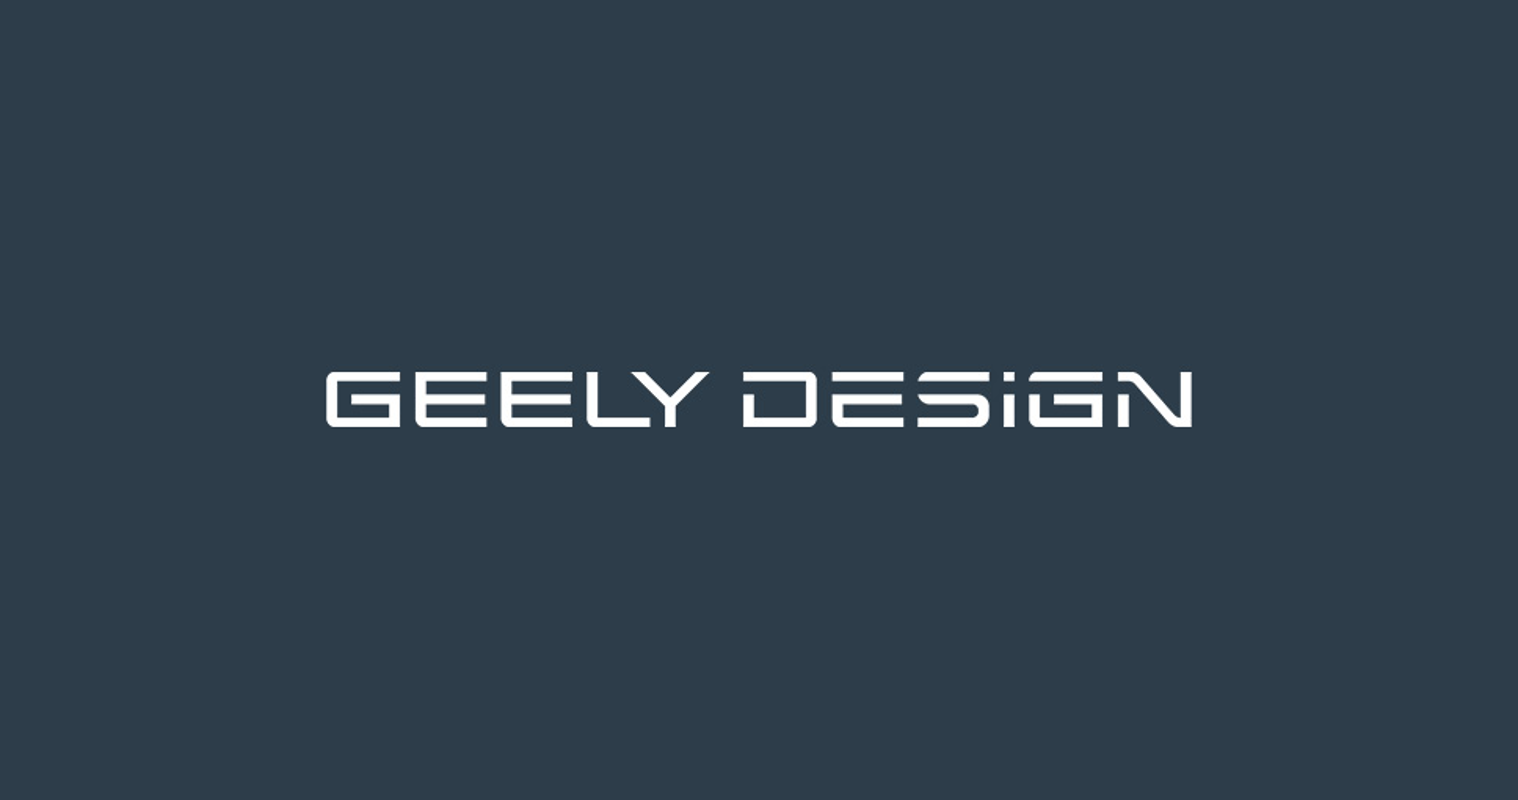 Geely deschide un nou centru de design la Milano